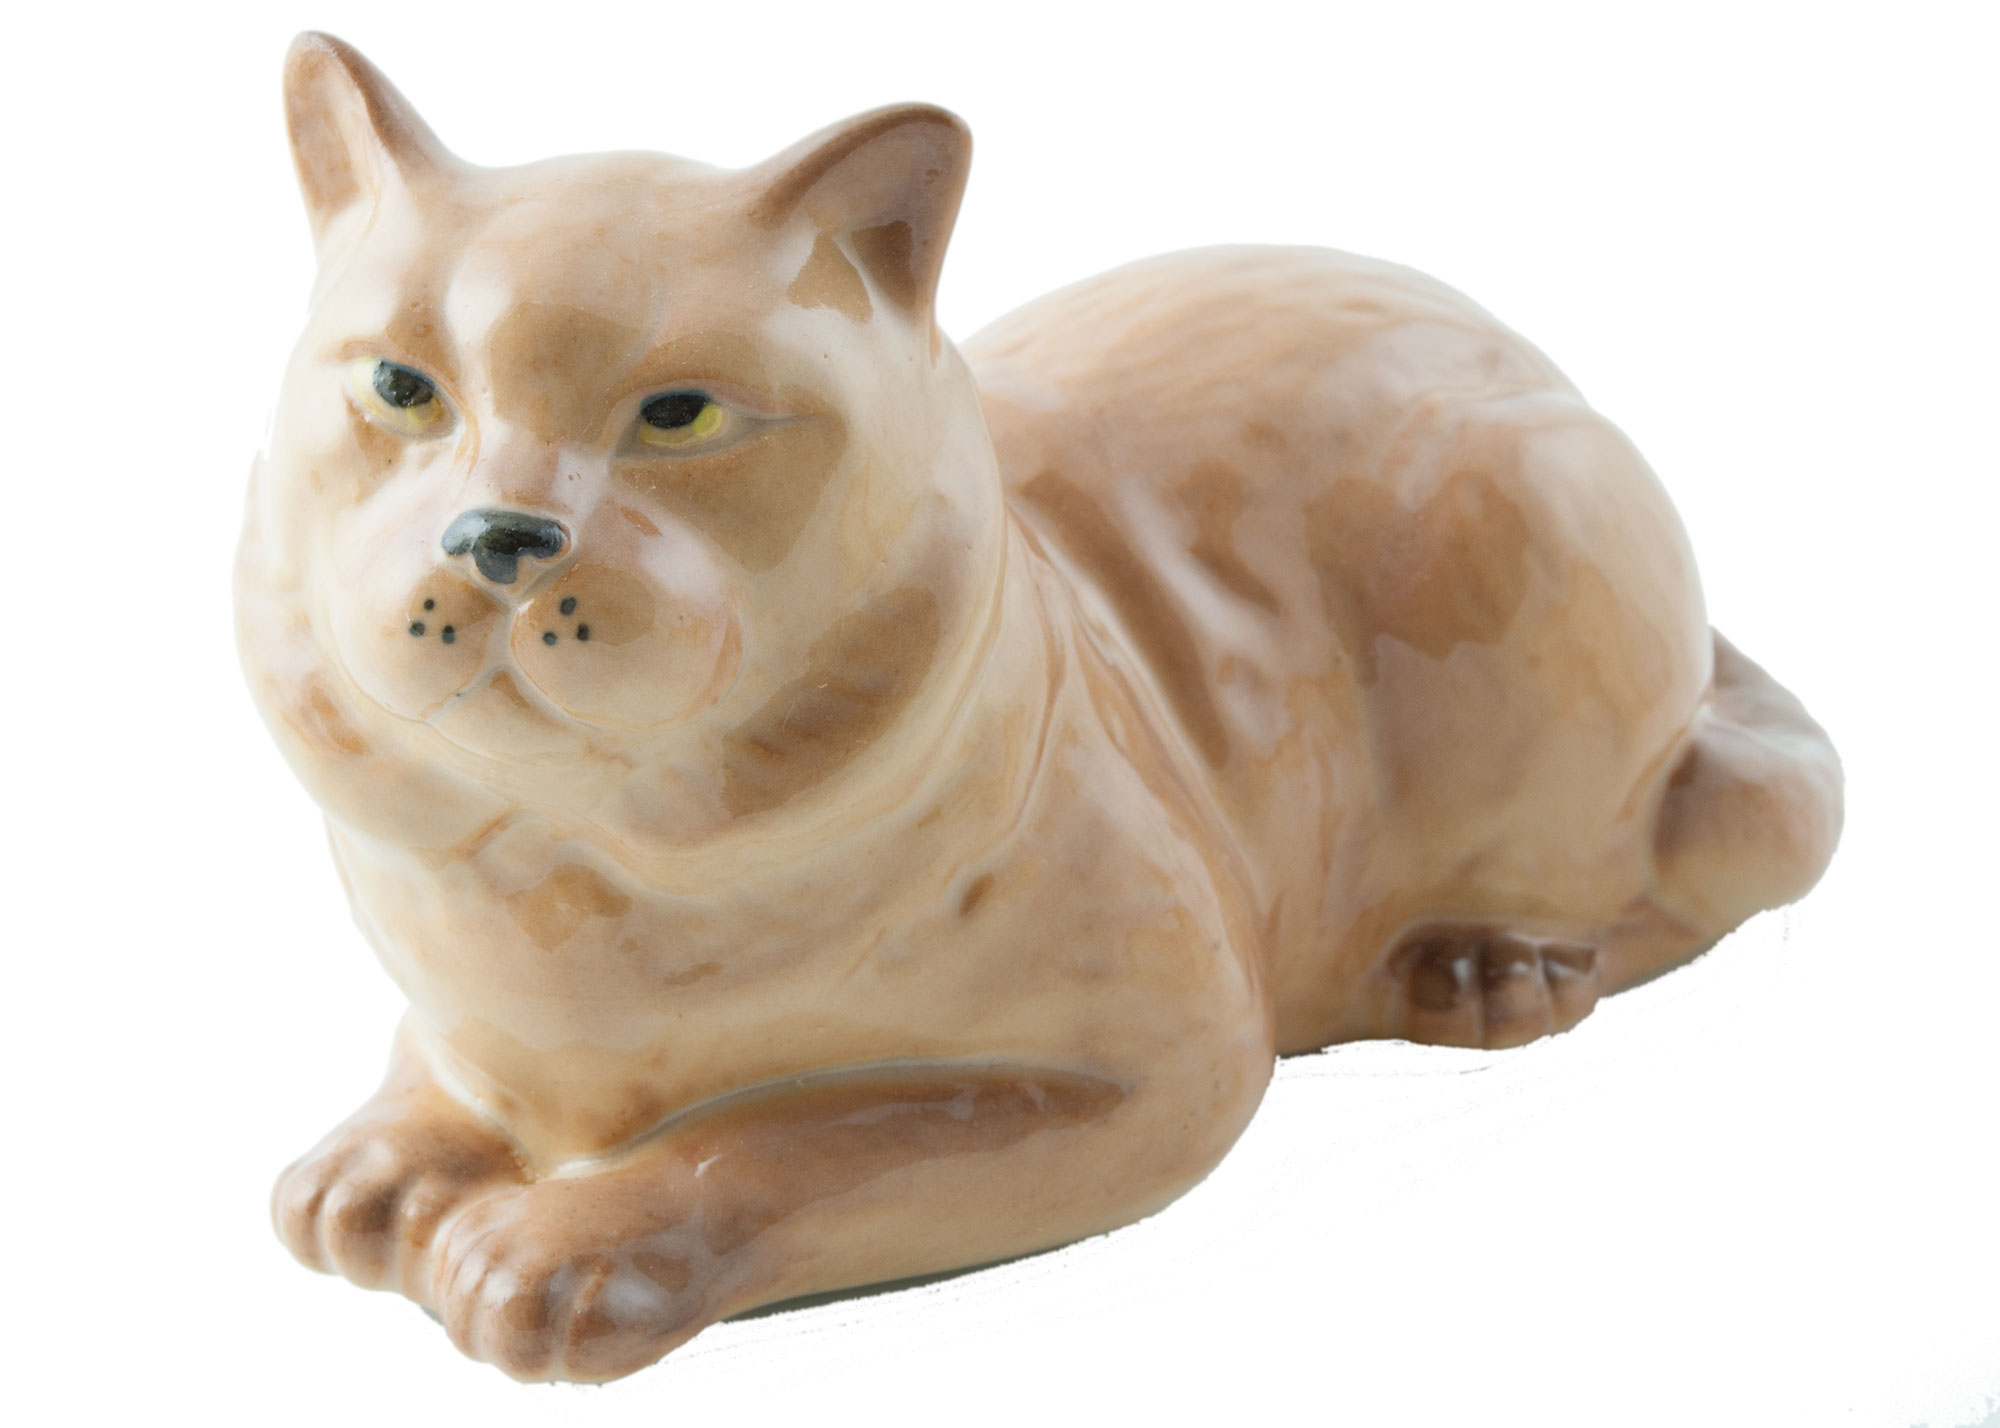 Buy British Cat Porcelain Figurine at GoldenCockerel.com